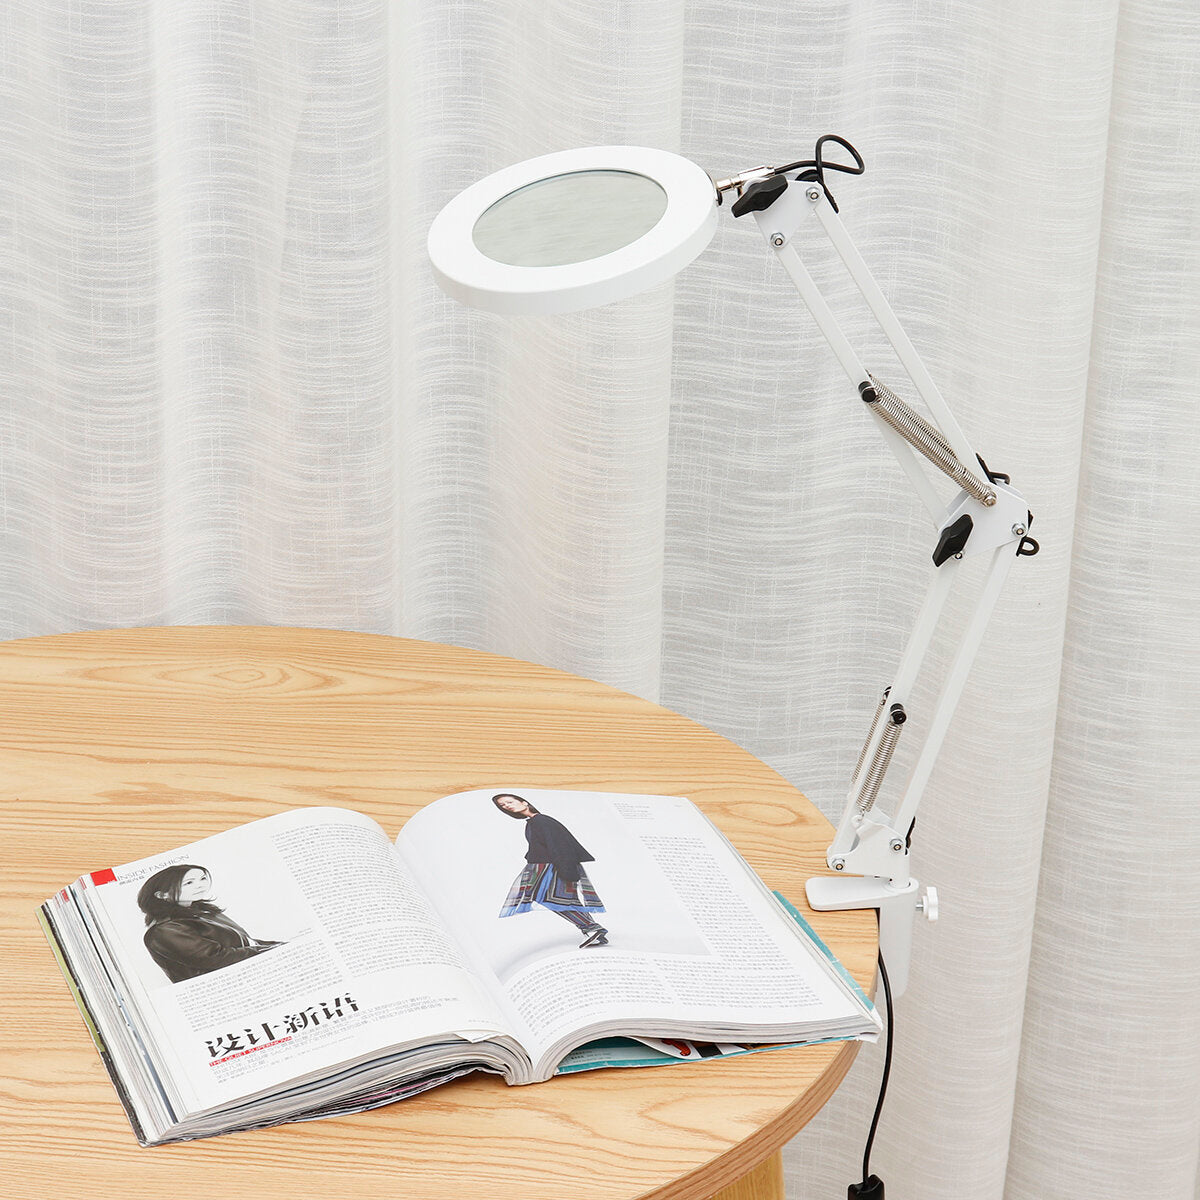 AU Large Lens ed Lamp Desk Magnifier 5x Magnifying Glass w/ Clamp LED